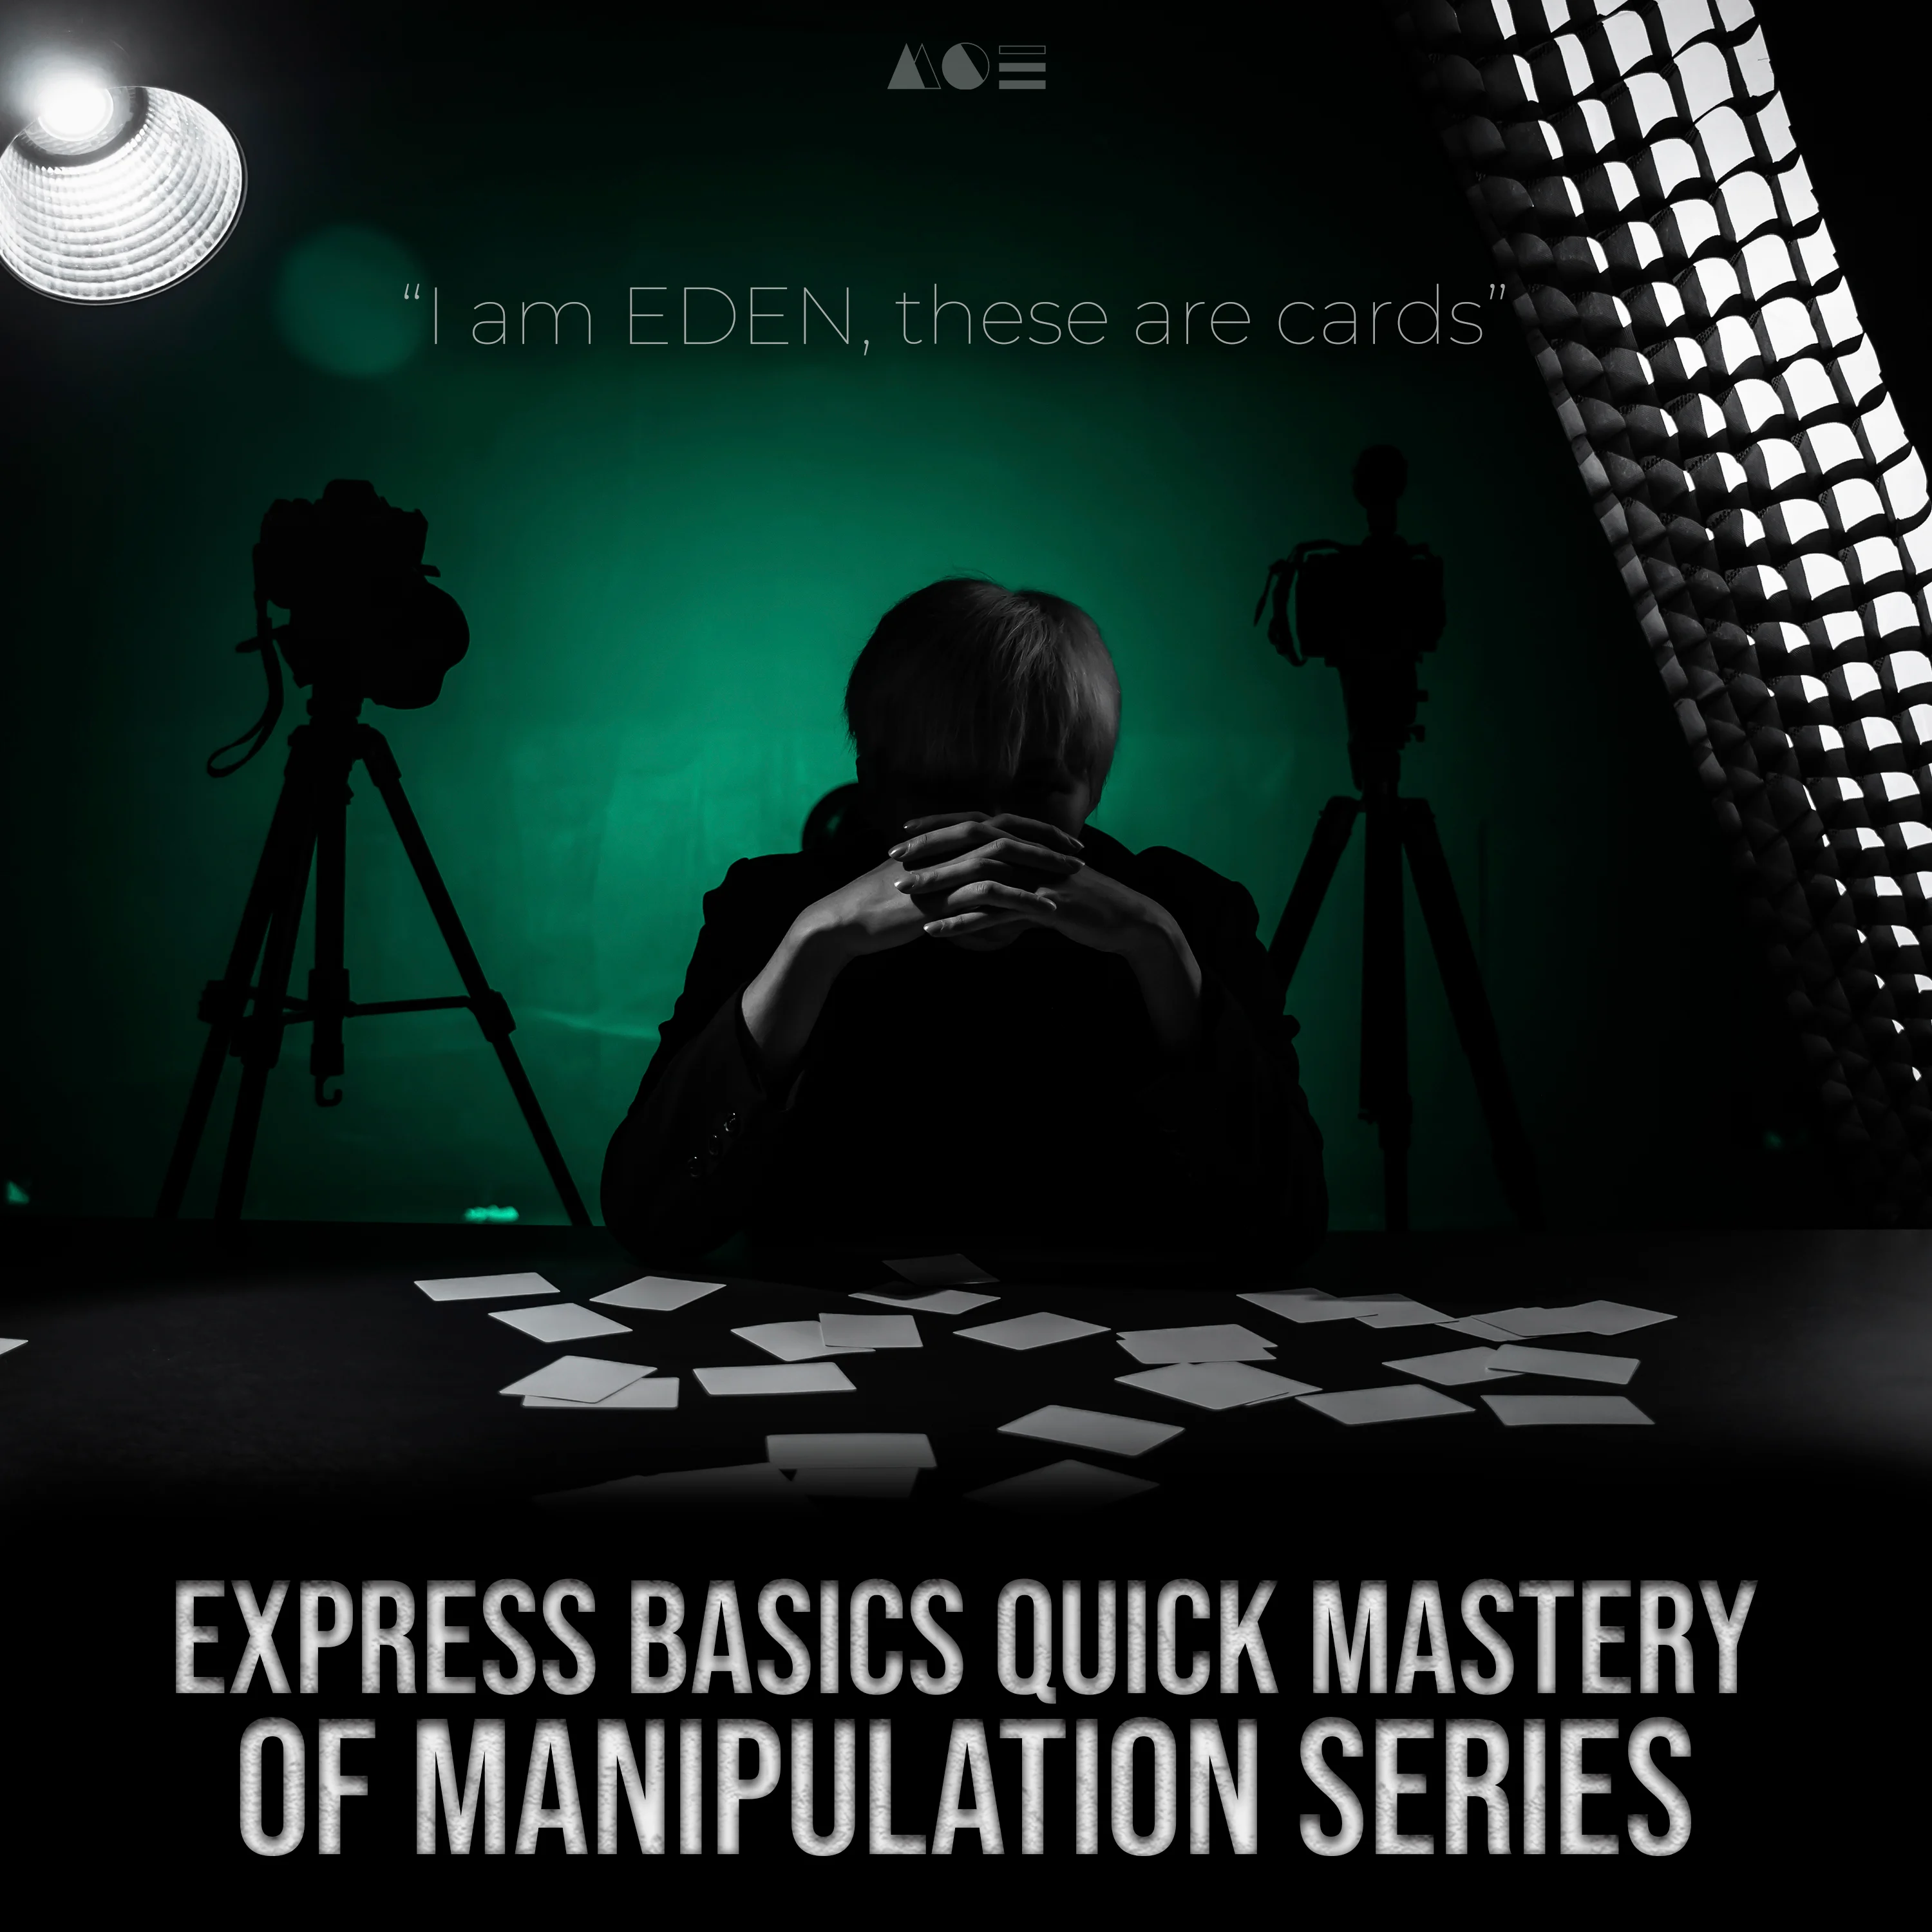 Express Basics Quick Mastery Of Manipulation Series ‘CARD’